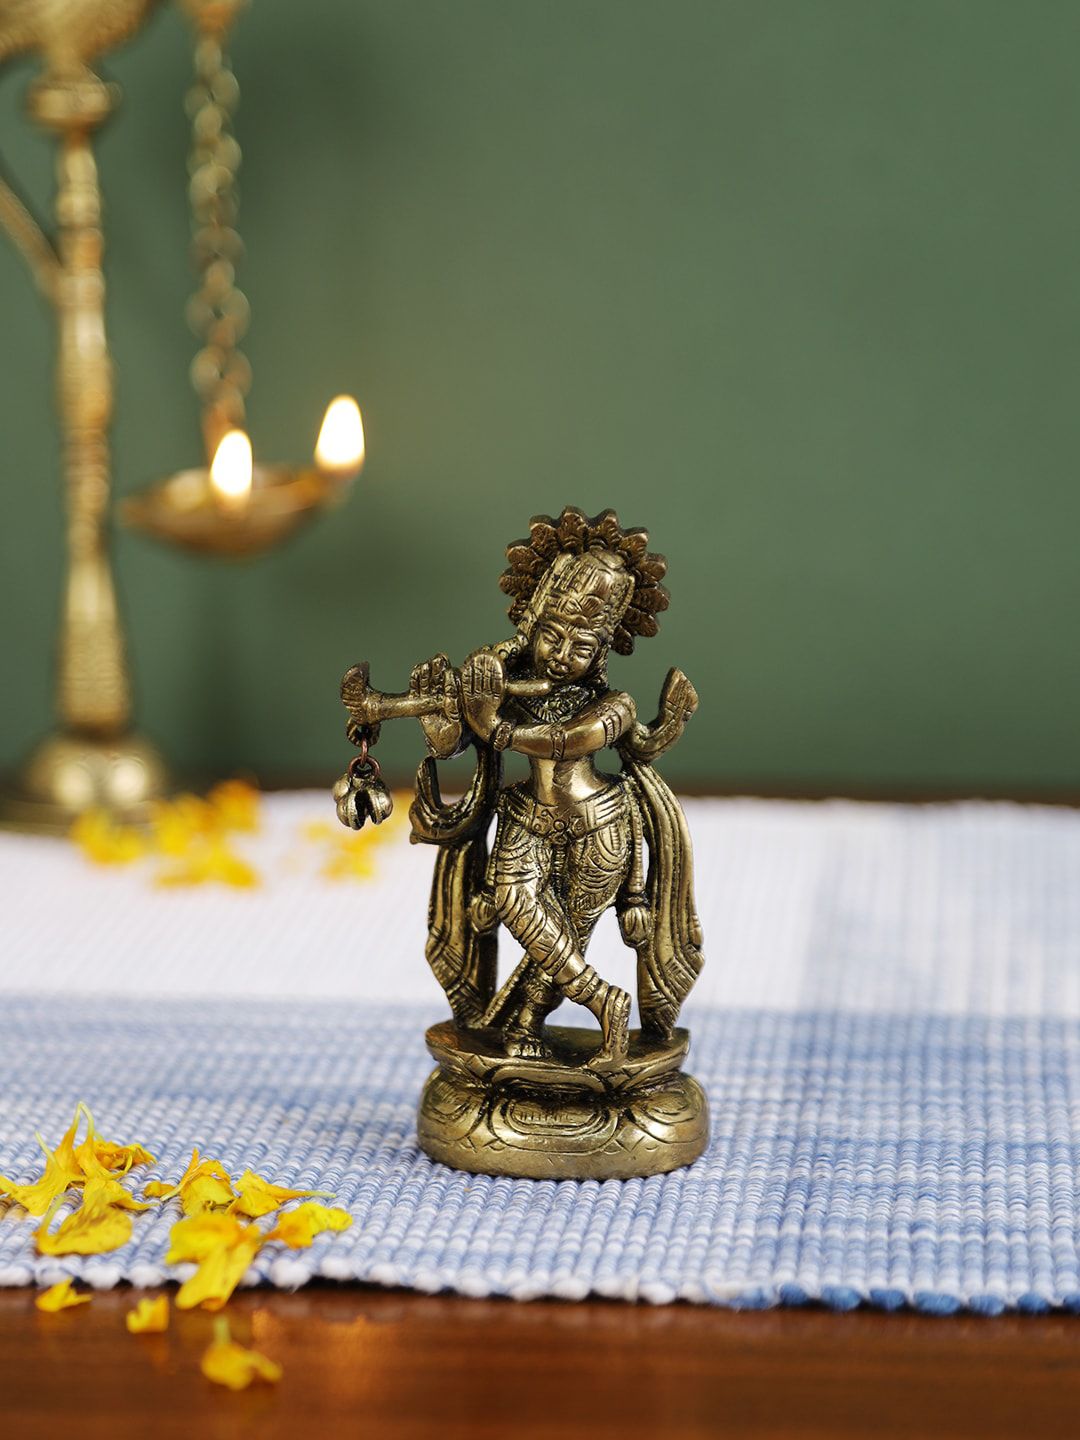 Imli Street Gold-Toned Krishna Idol Showpiece Price in India